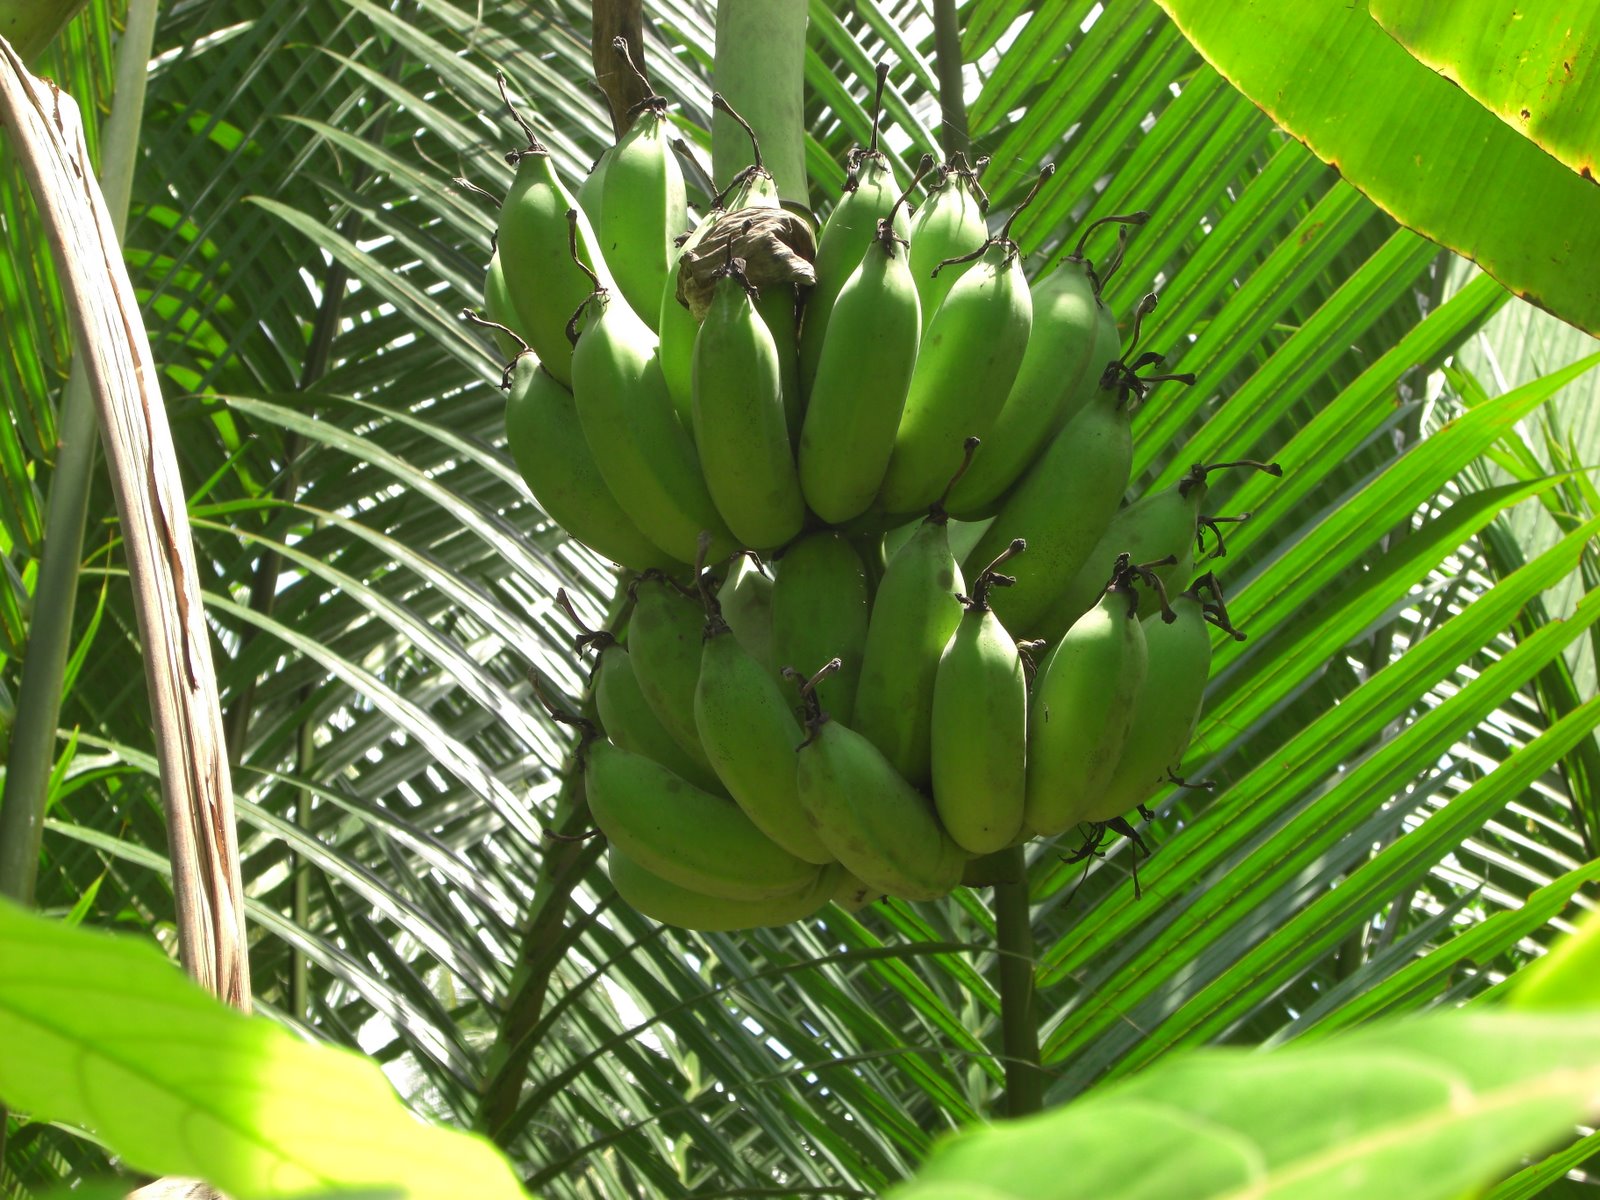 File:Green bananas on tree Vietnam.jpg - Wikimedia Commons